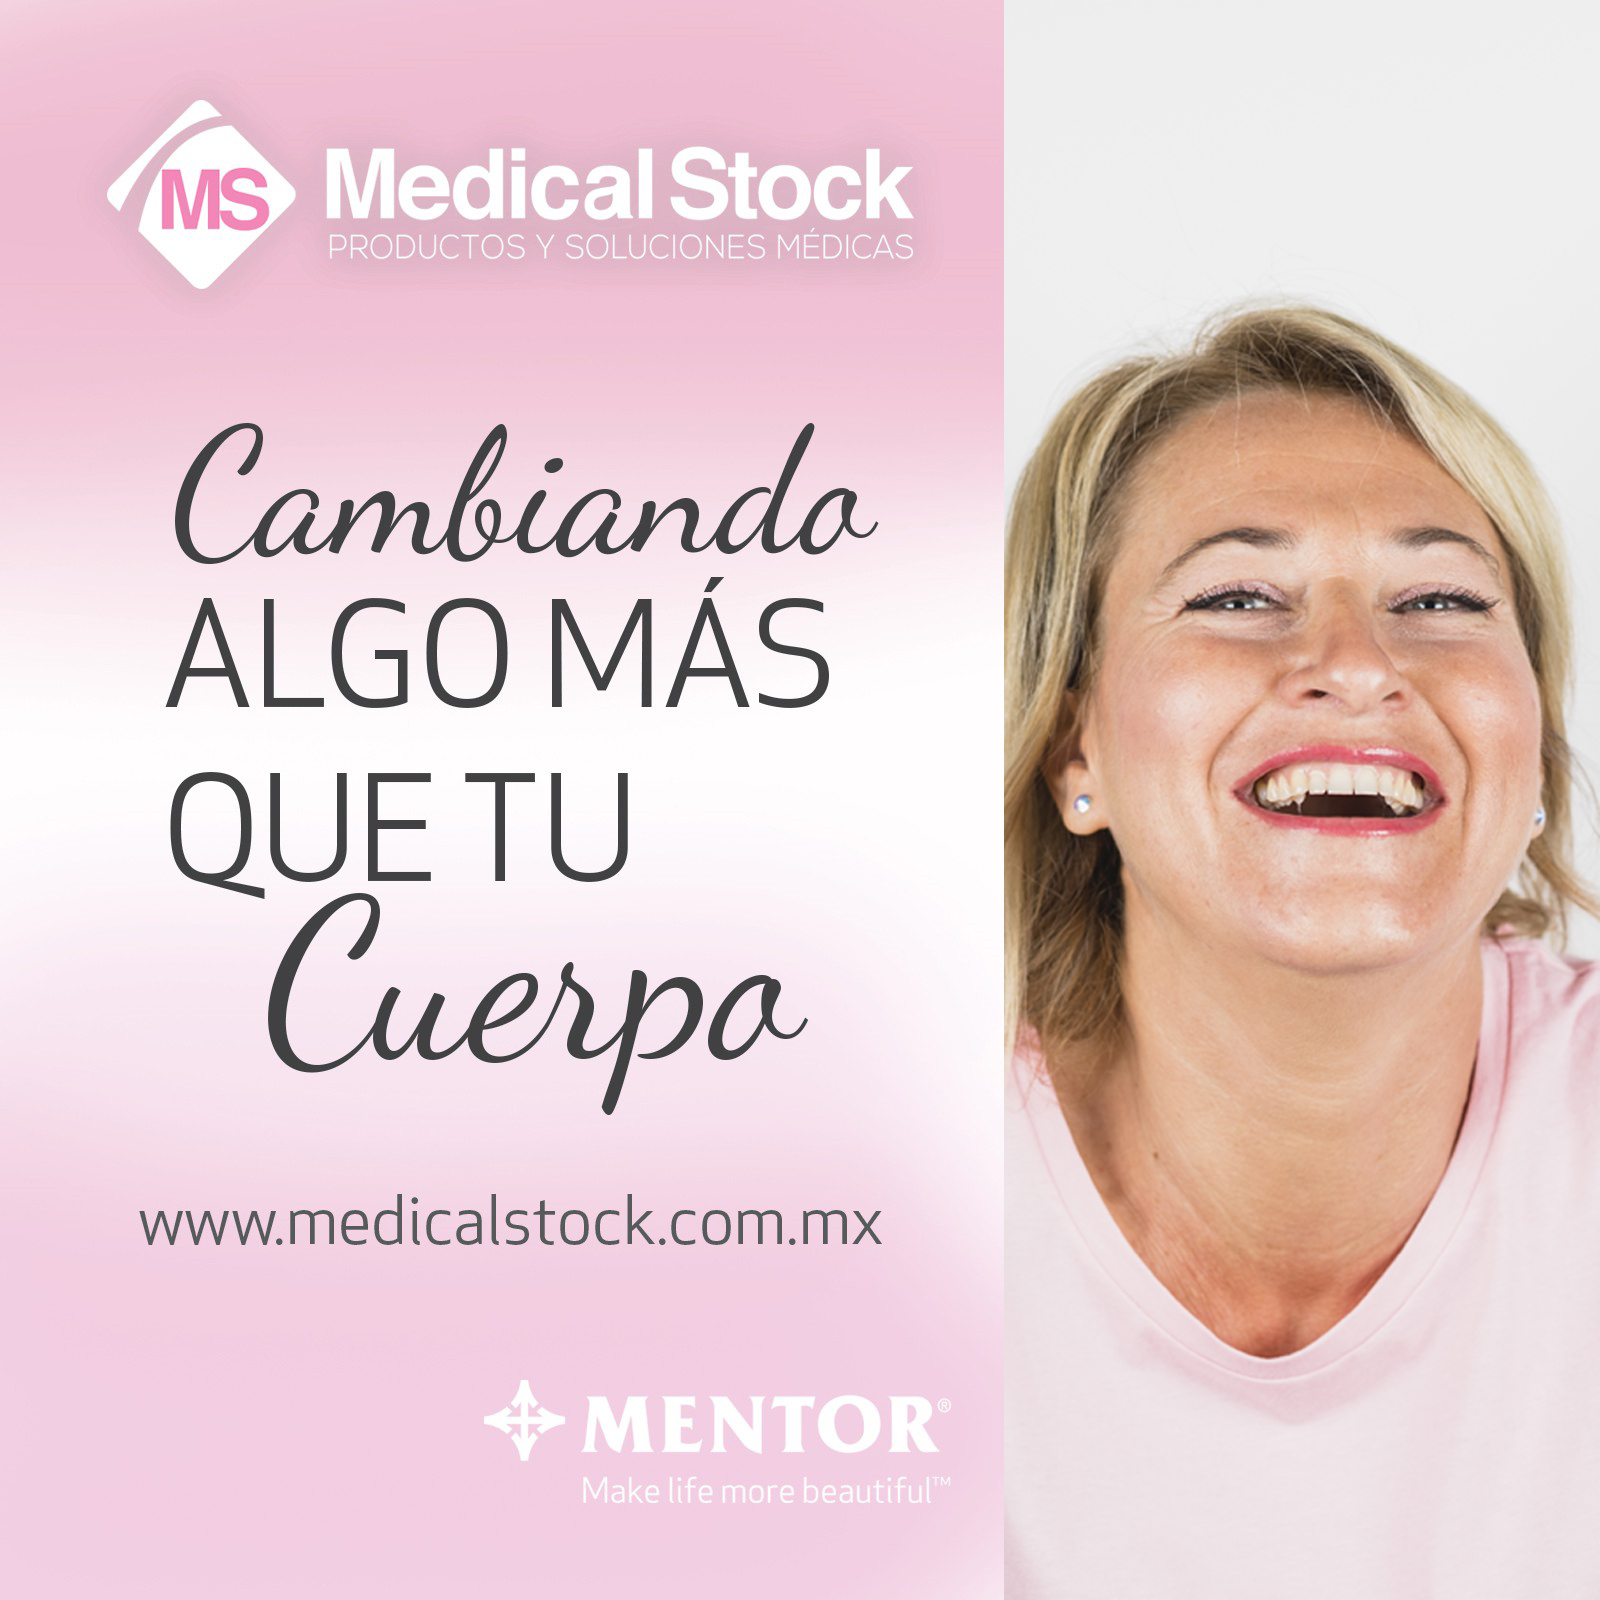 medical stock y mentor